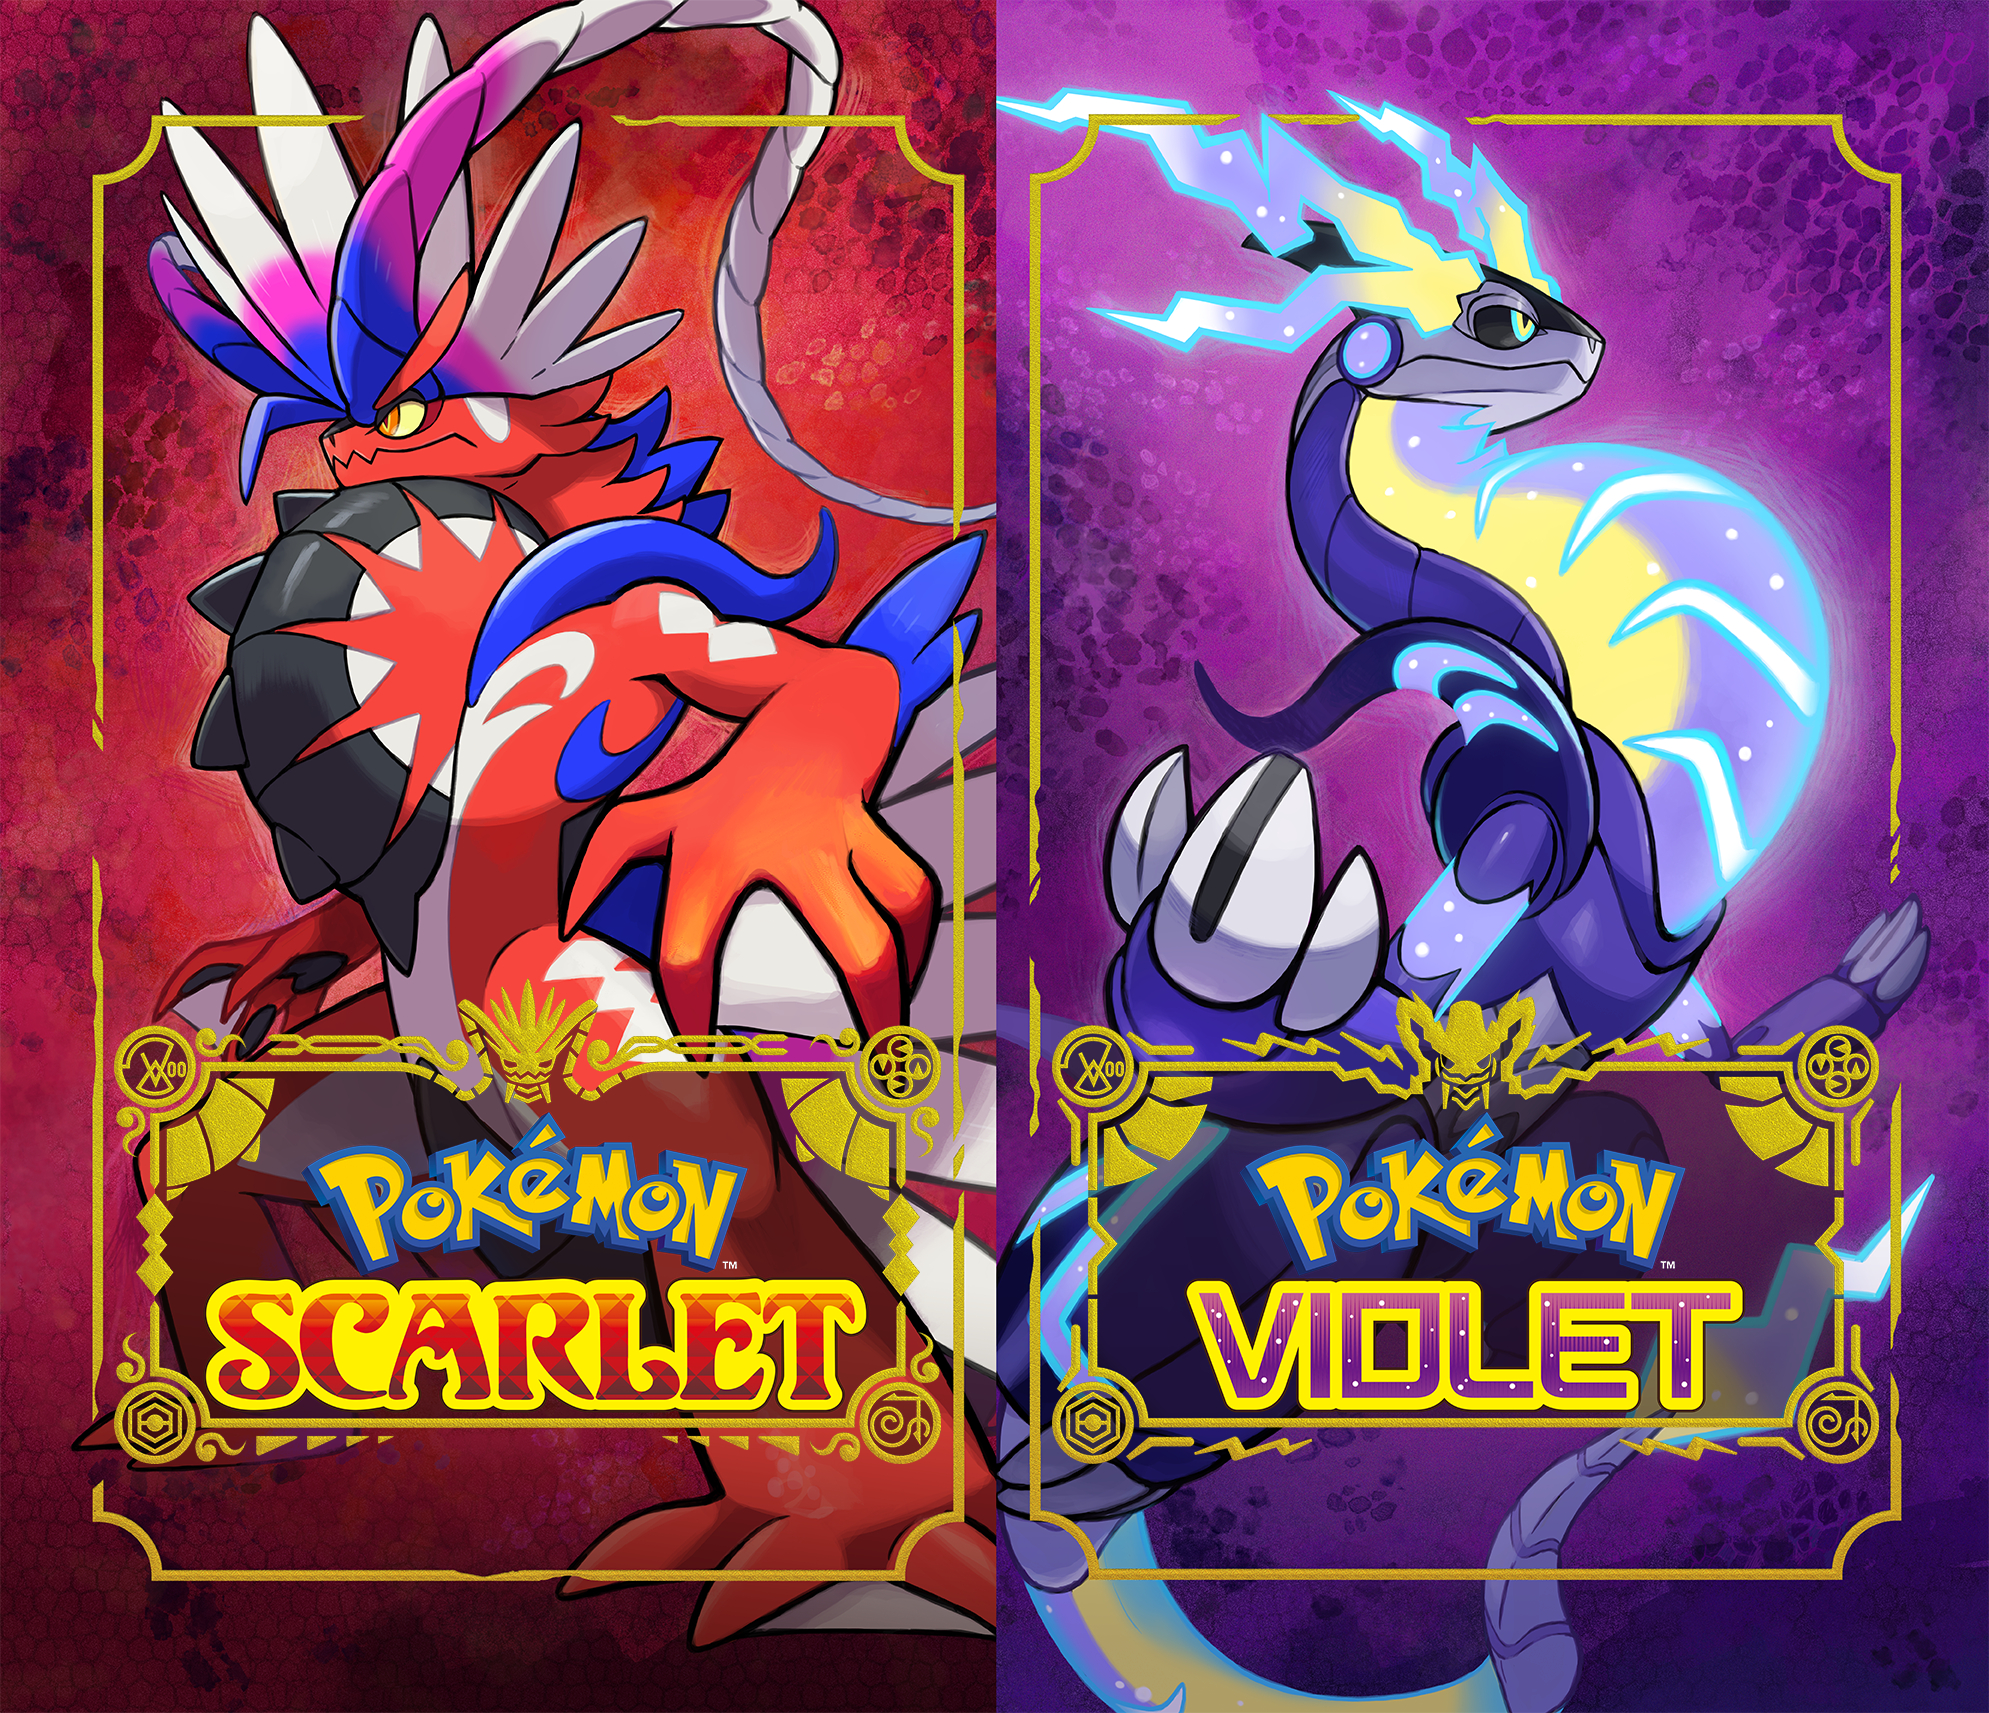 Is Pokemon Scarlet & Violet Or Pokemon Sword & Shield Better?